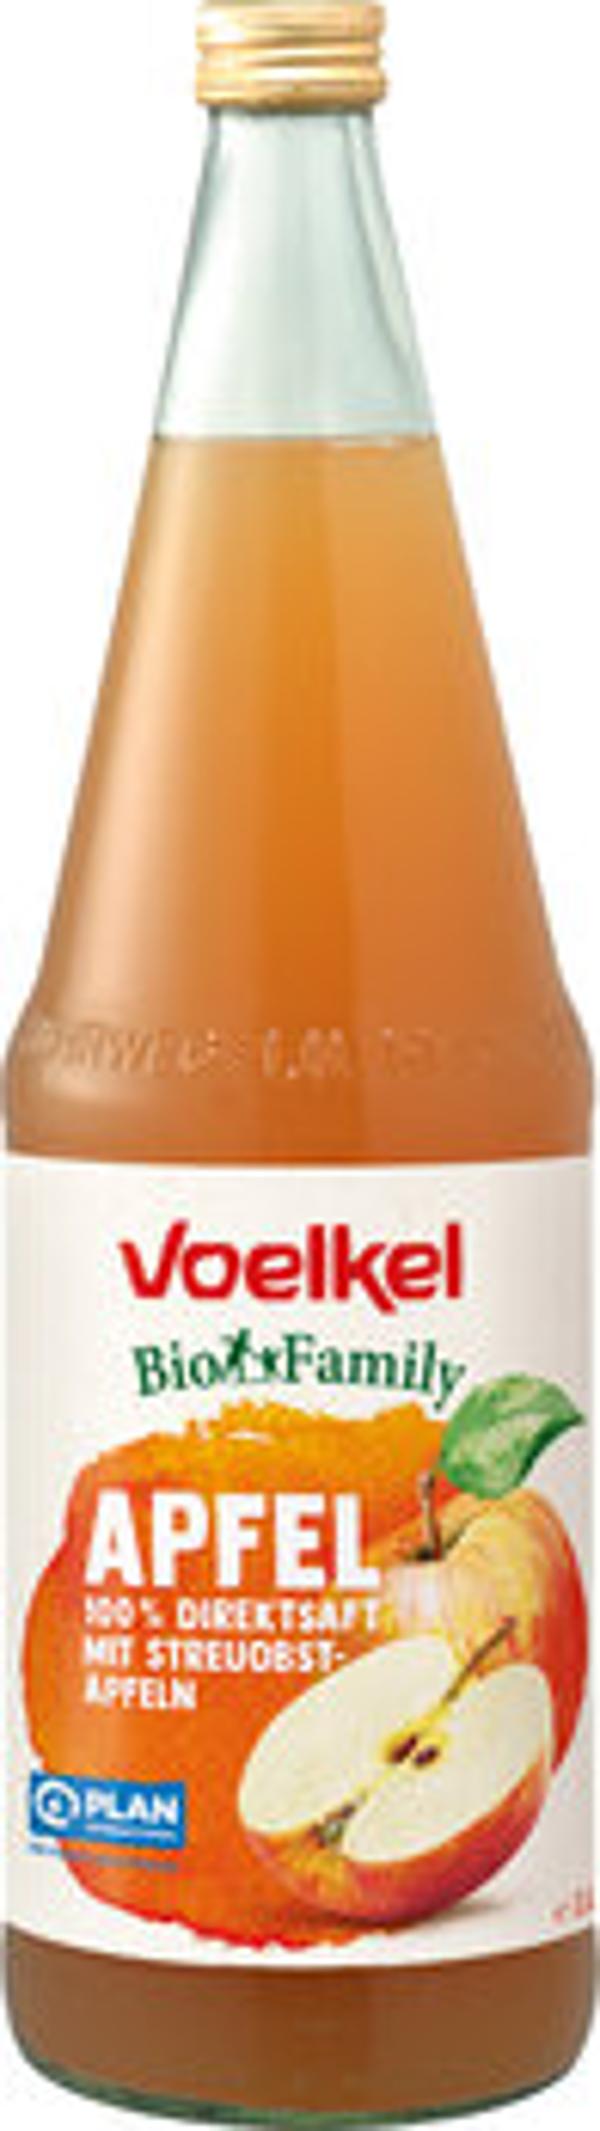 Produktfoto zu Apfelsaft Bio Family 1L